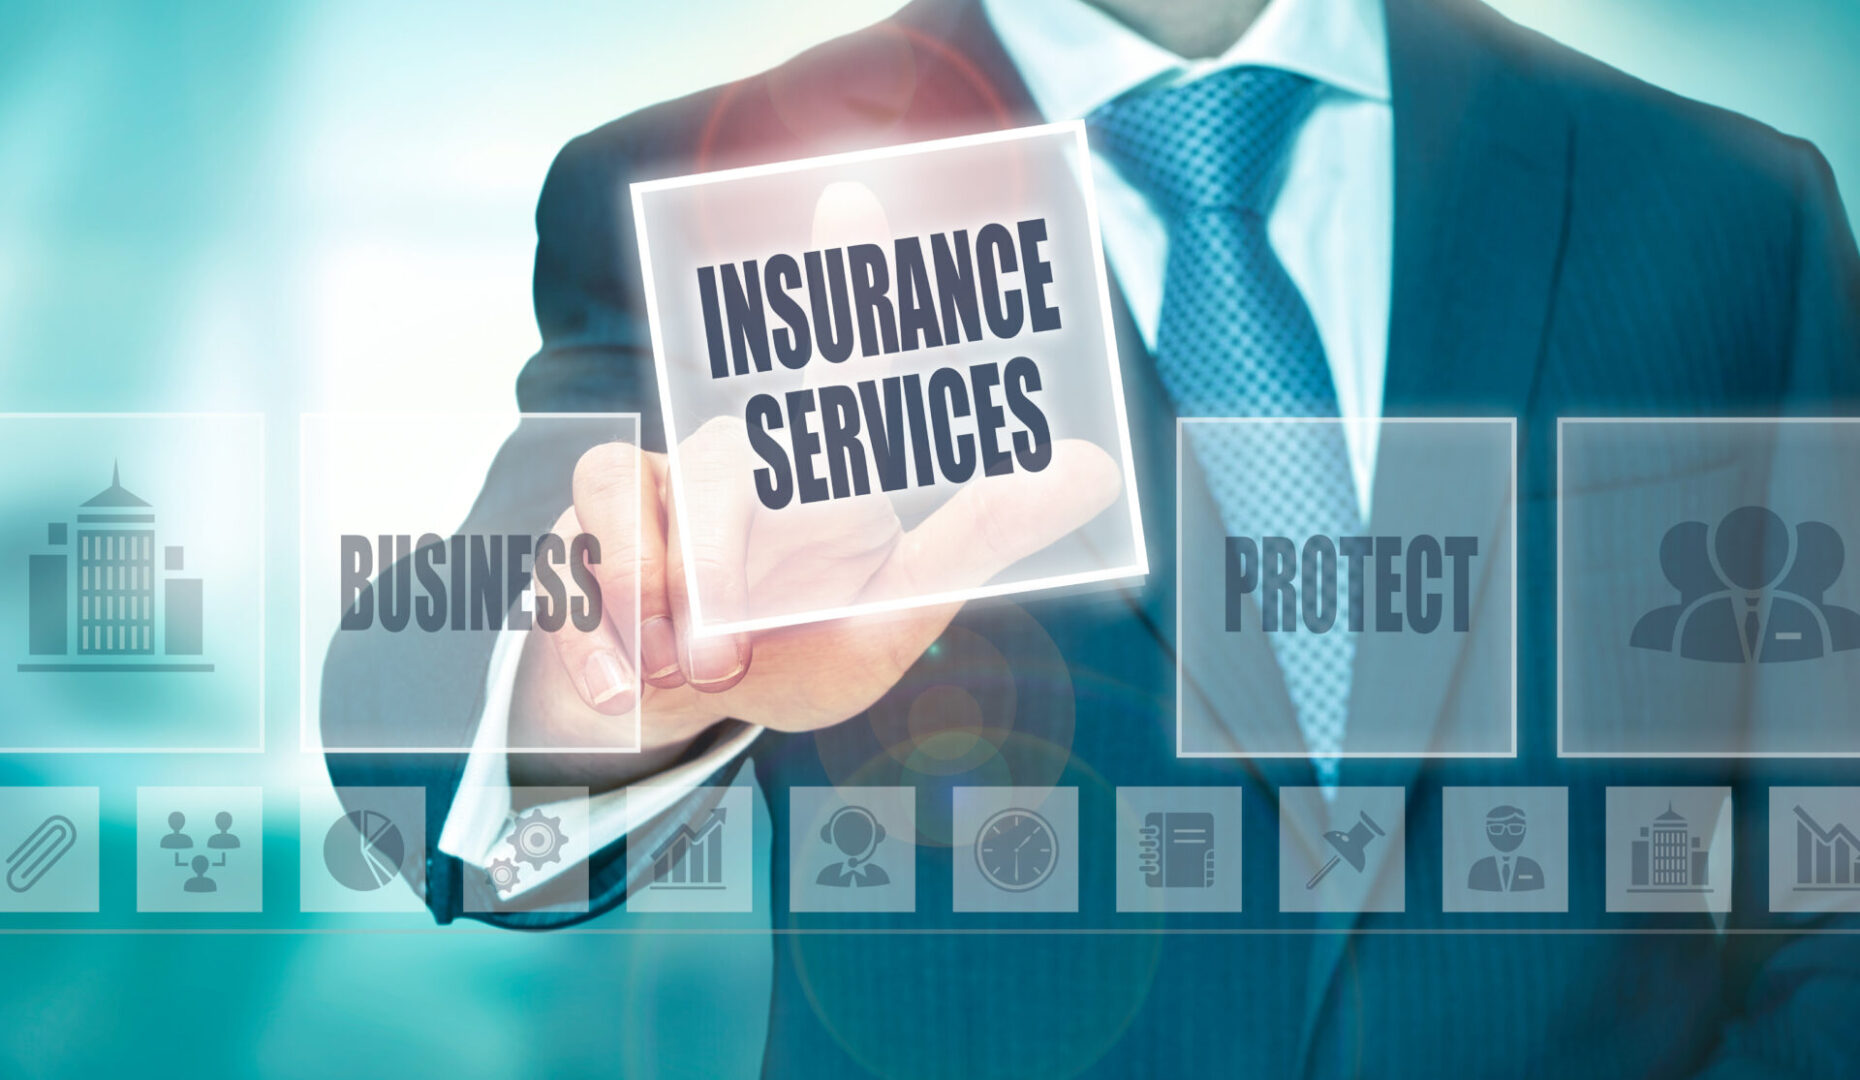 A businessman pressing an Insurance Services button on a transparent screen.